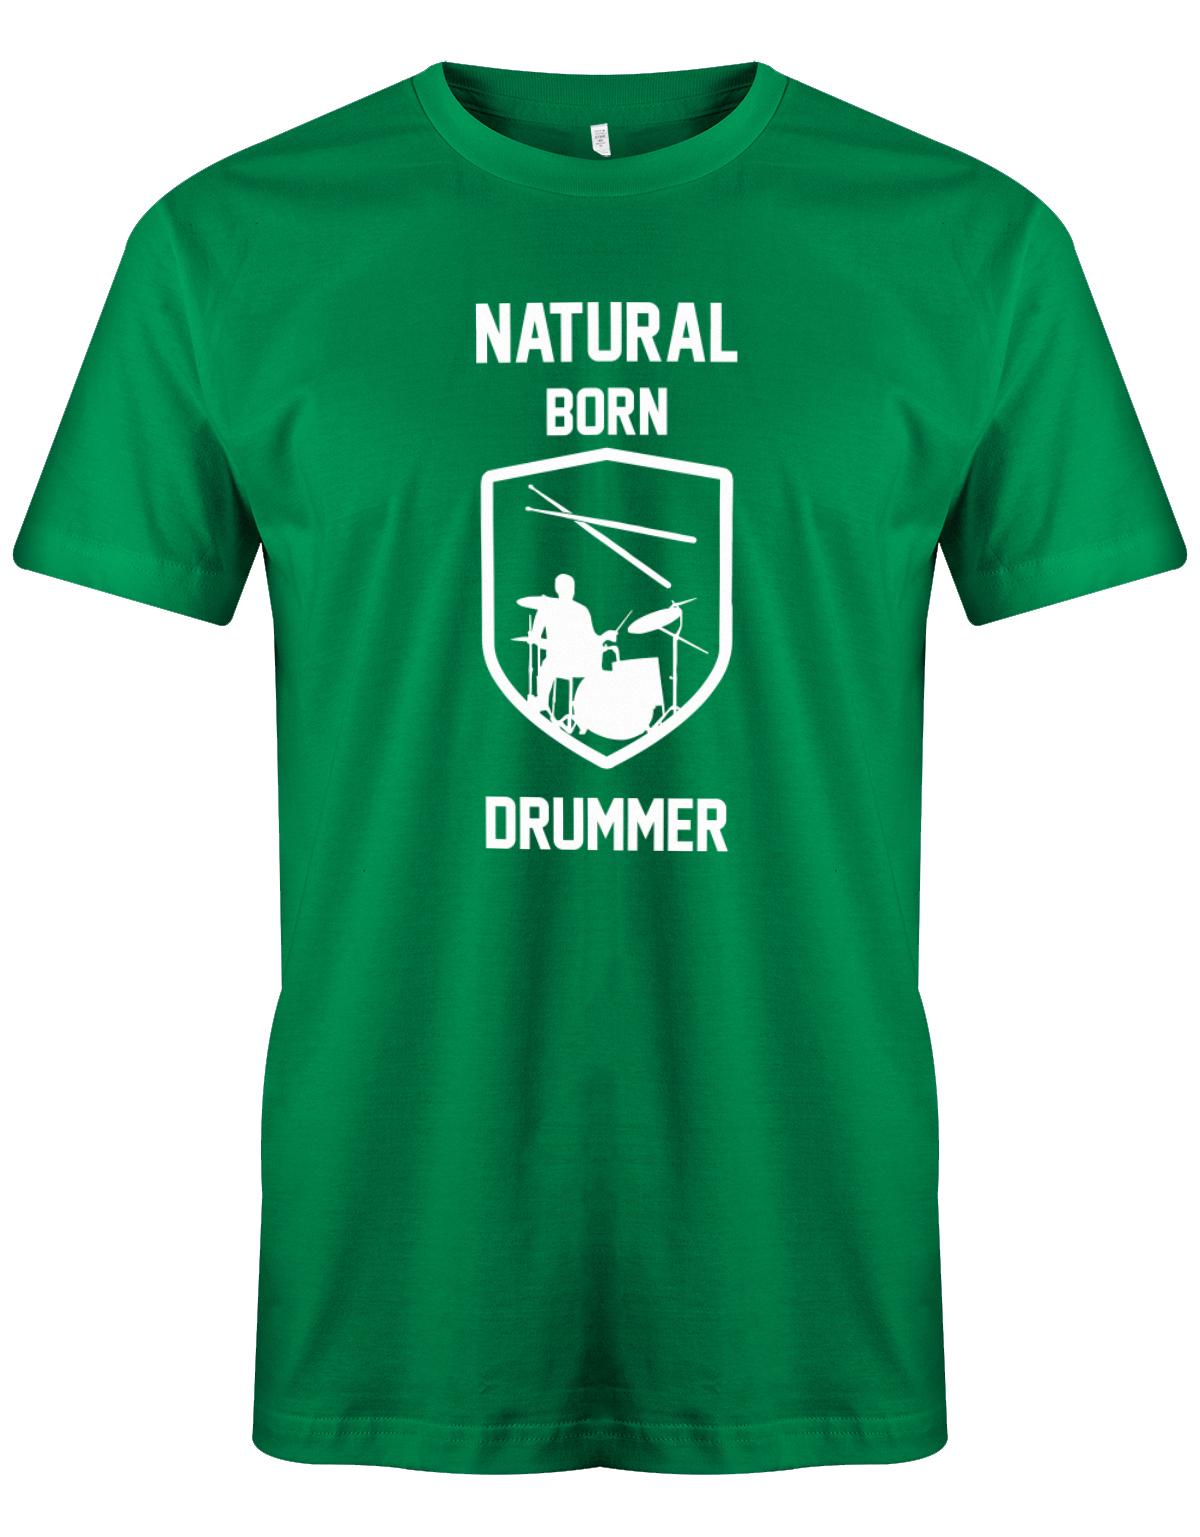 Natural-Born-Drummer-Herren-Schlagzeuger-Shirt-Gr-n